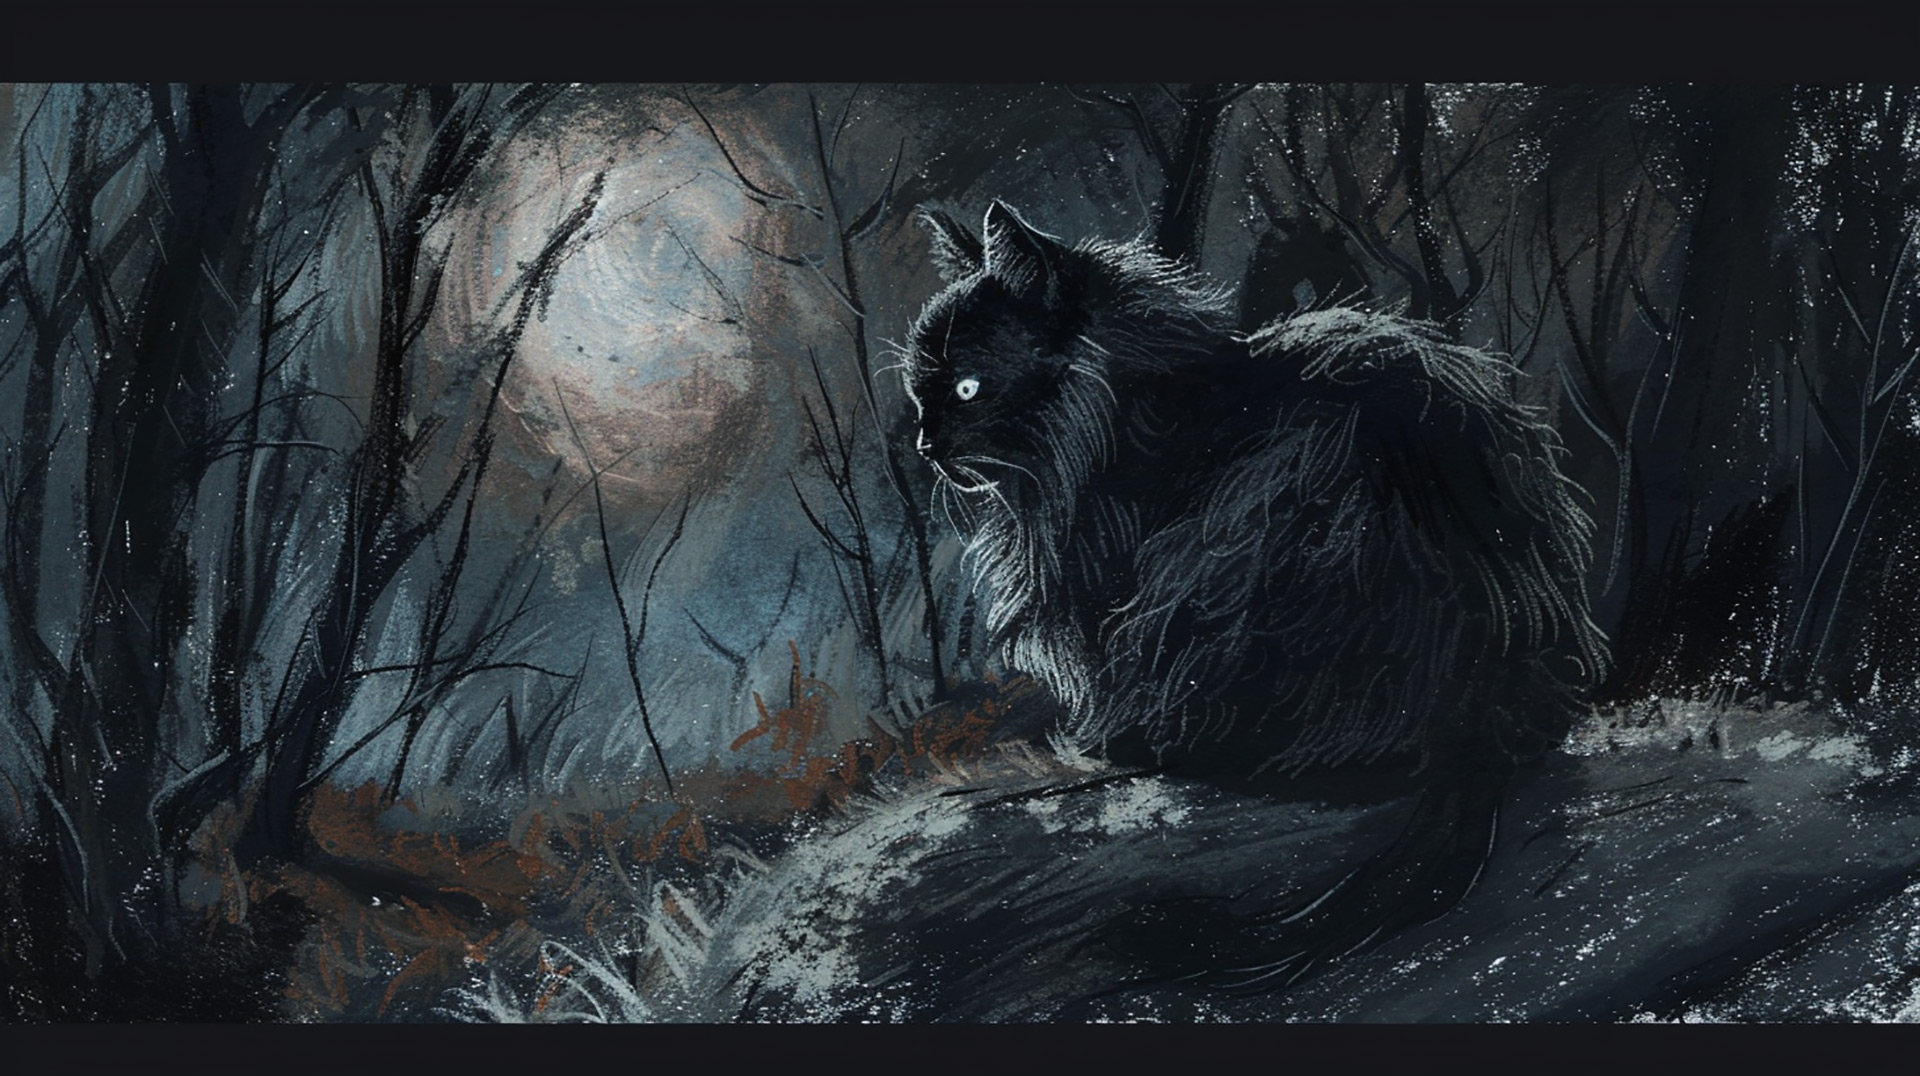 Full Body Sketch of Grey Cat in Spooky Forest: Download in 4K